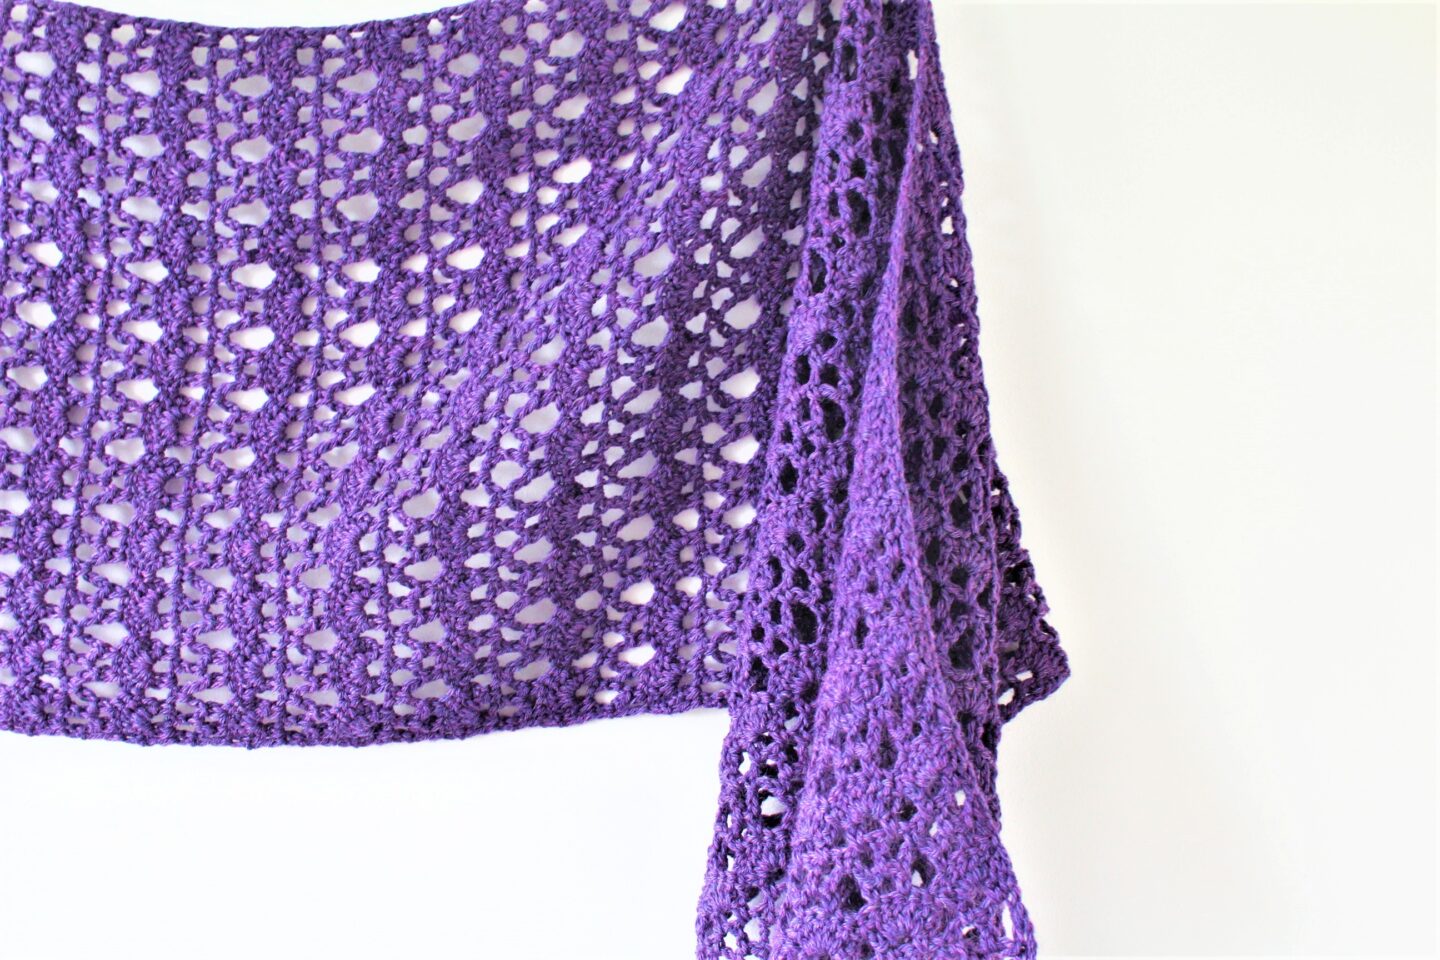 New pattern release :: Breezy Cabana shawl!